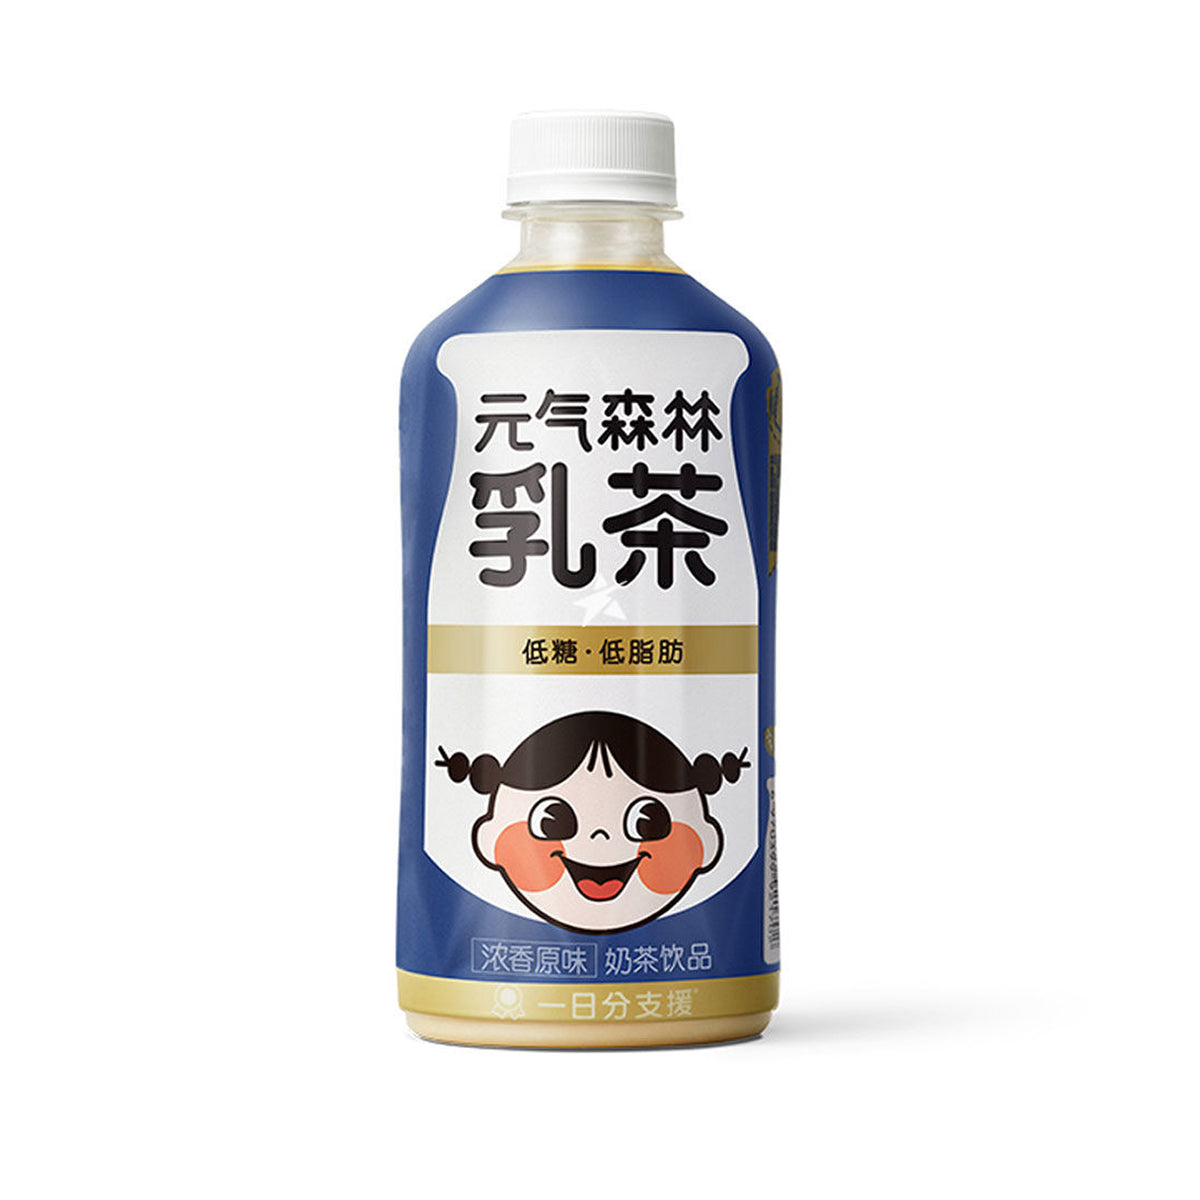 genki forest milk tea original flavor - 450ml